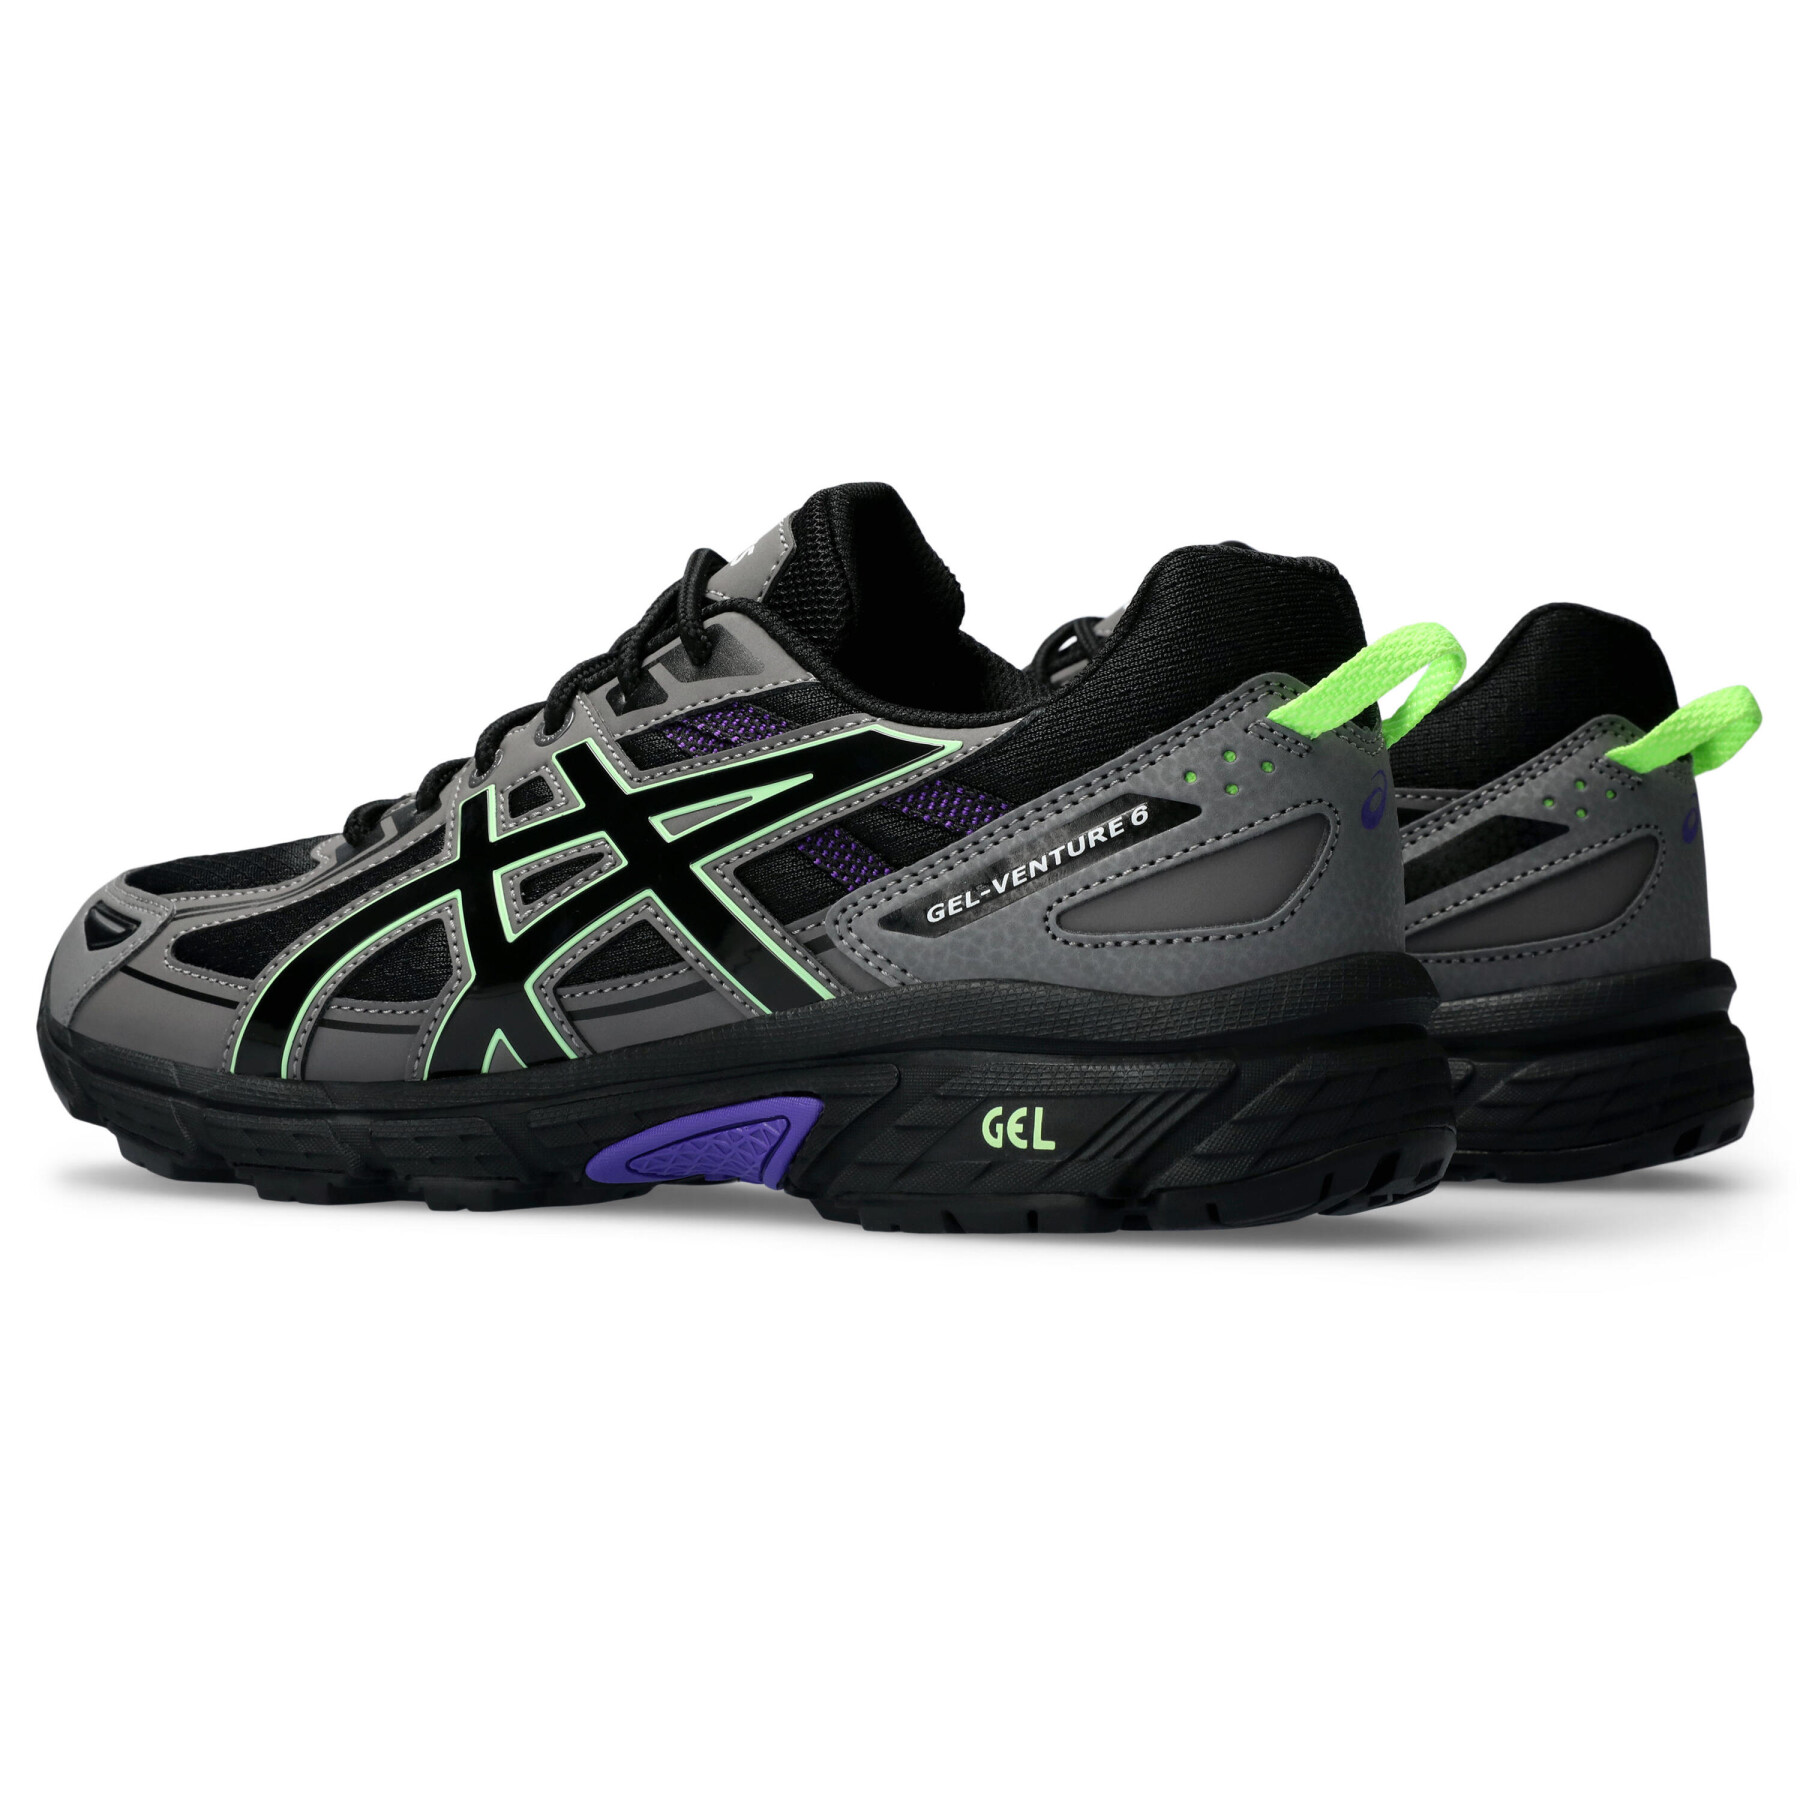 Sneakers Asics Gel-Venture 6